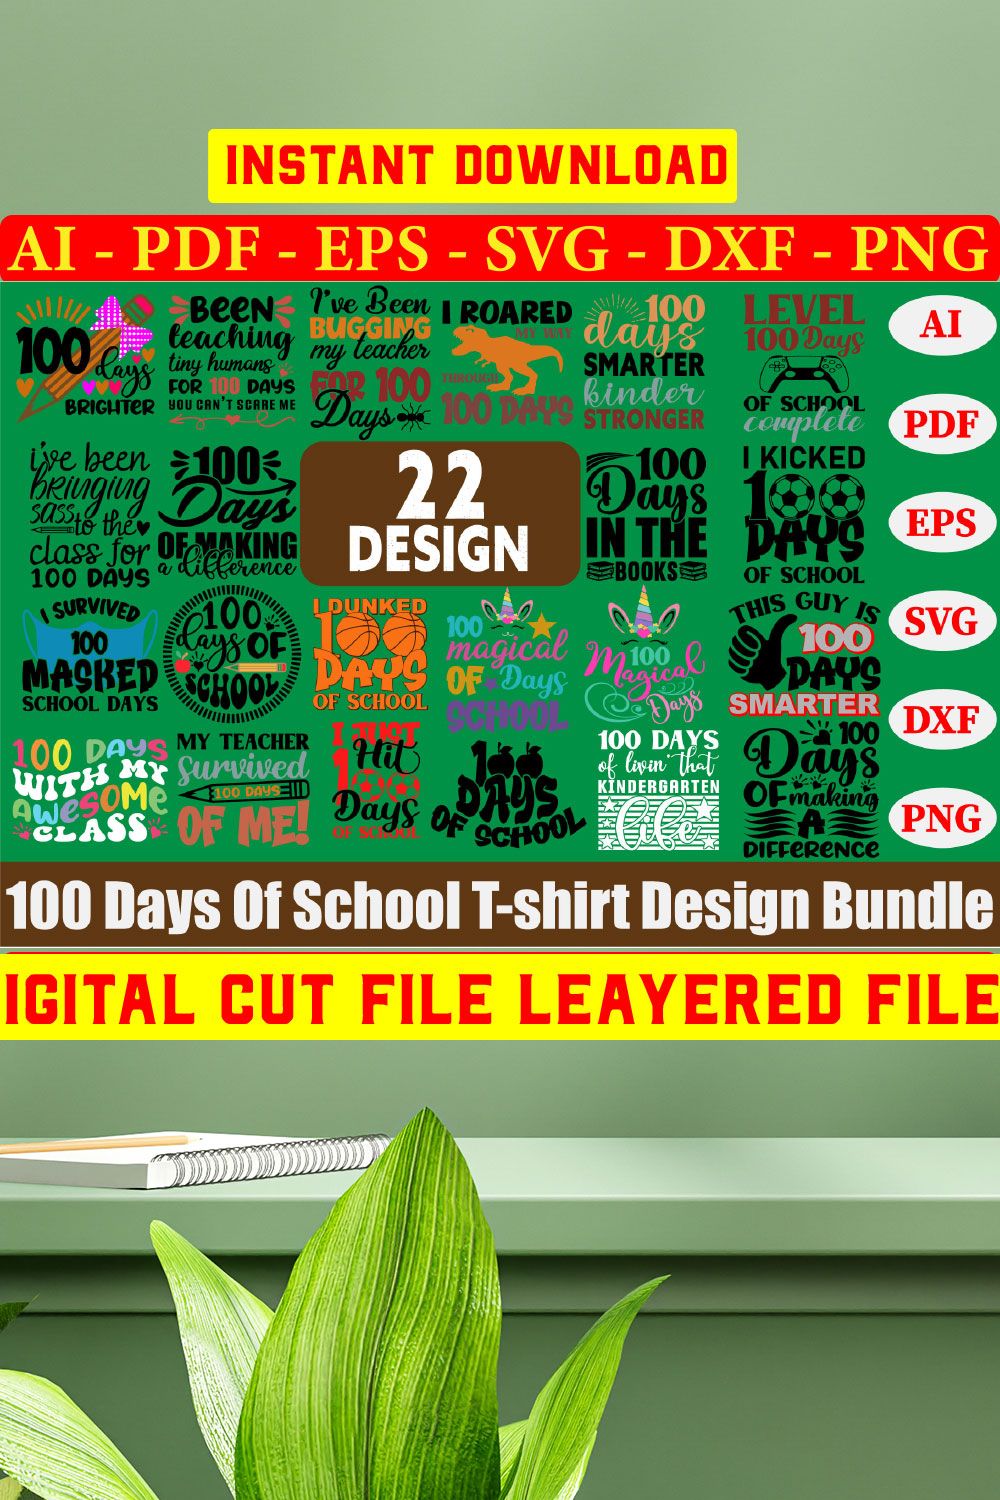 100 Days Of School T-shirt Design Bundle pinterest preview image.